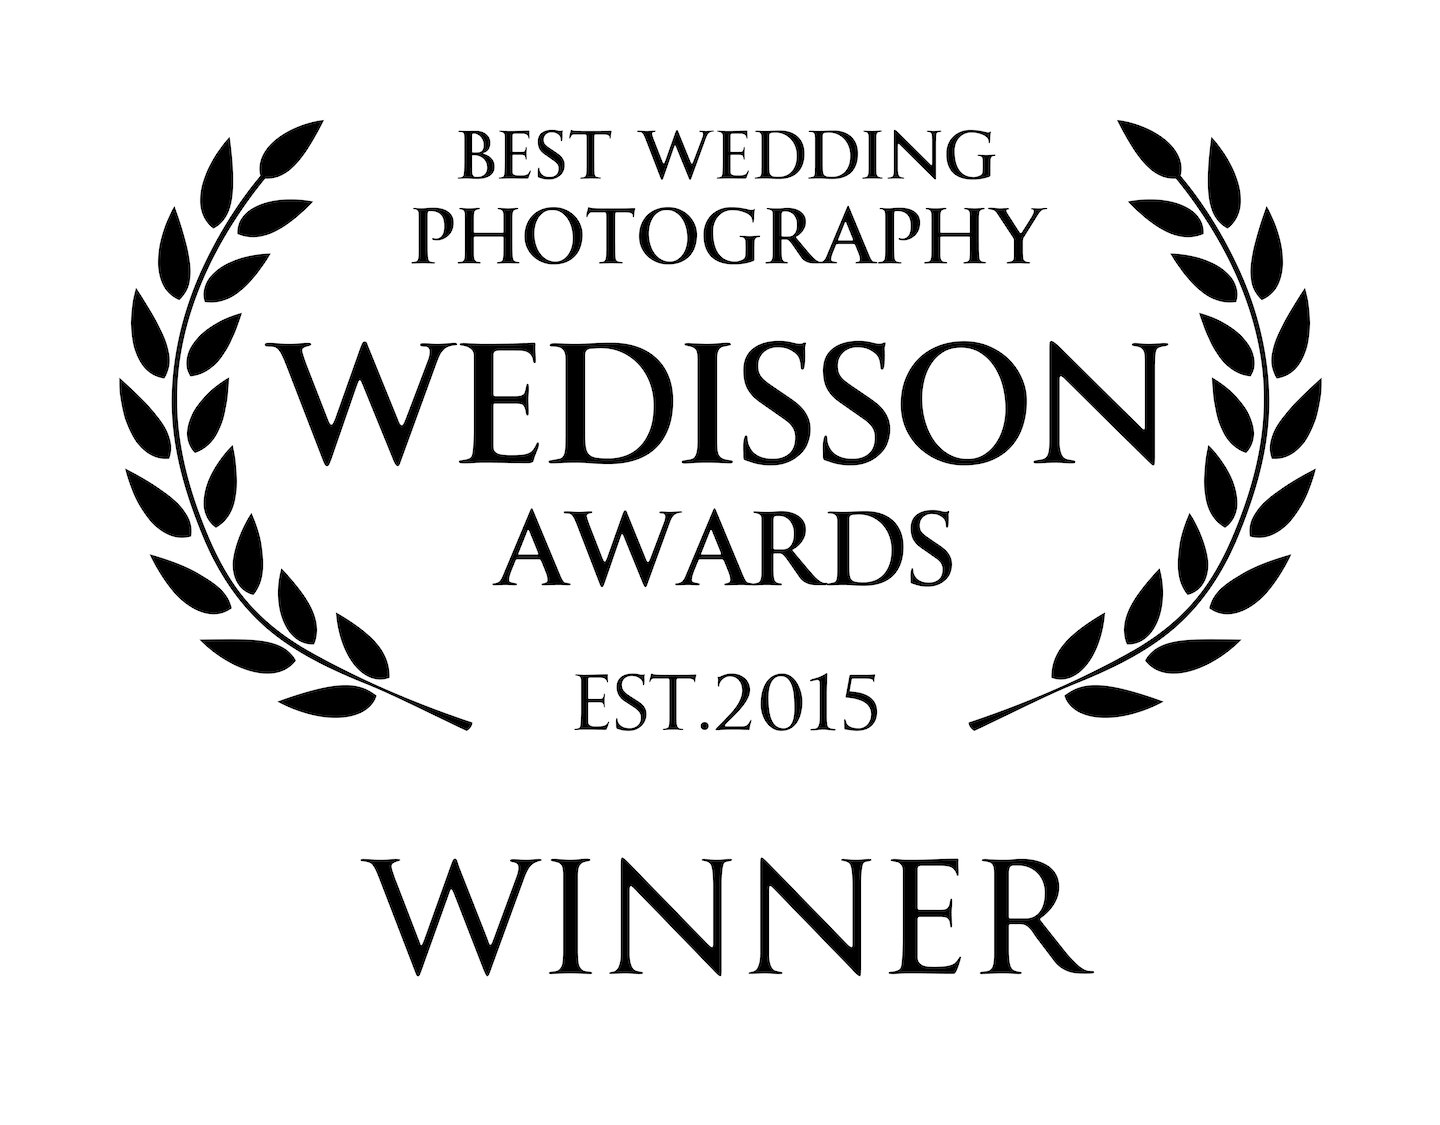 Wedisson Award Best Wedding Photo